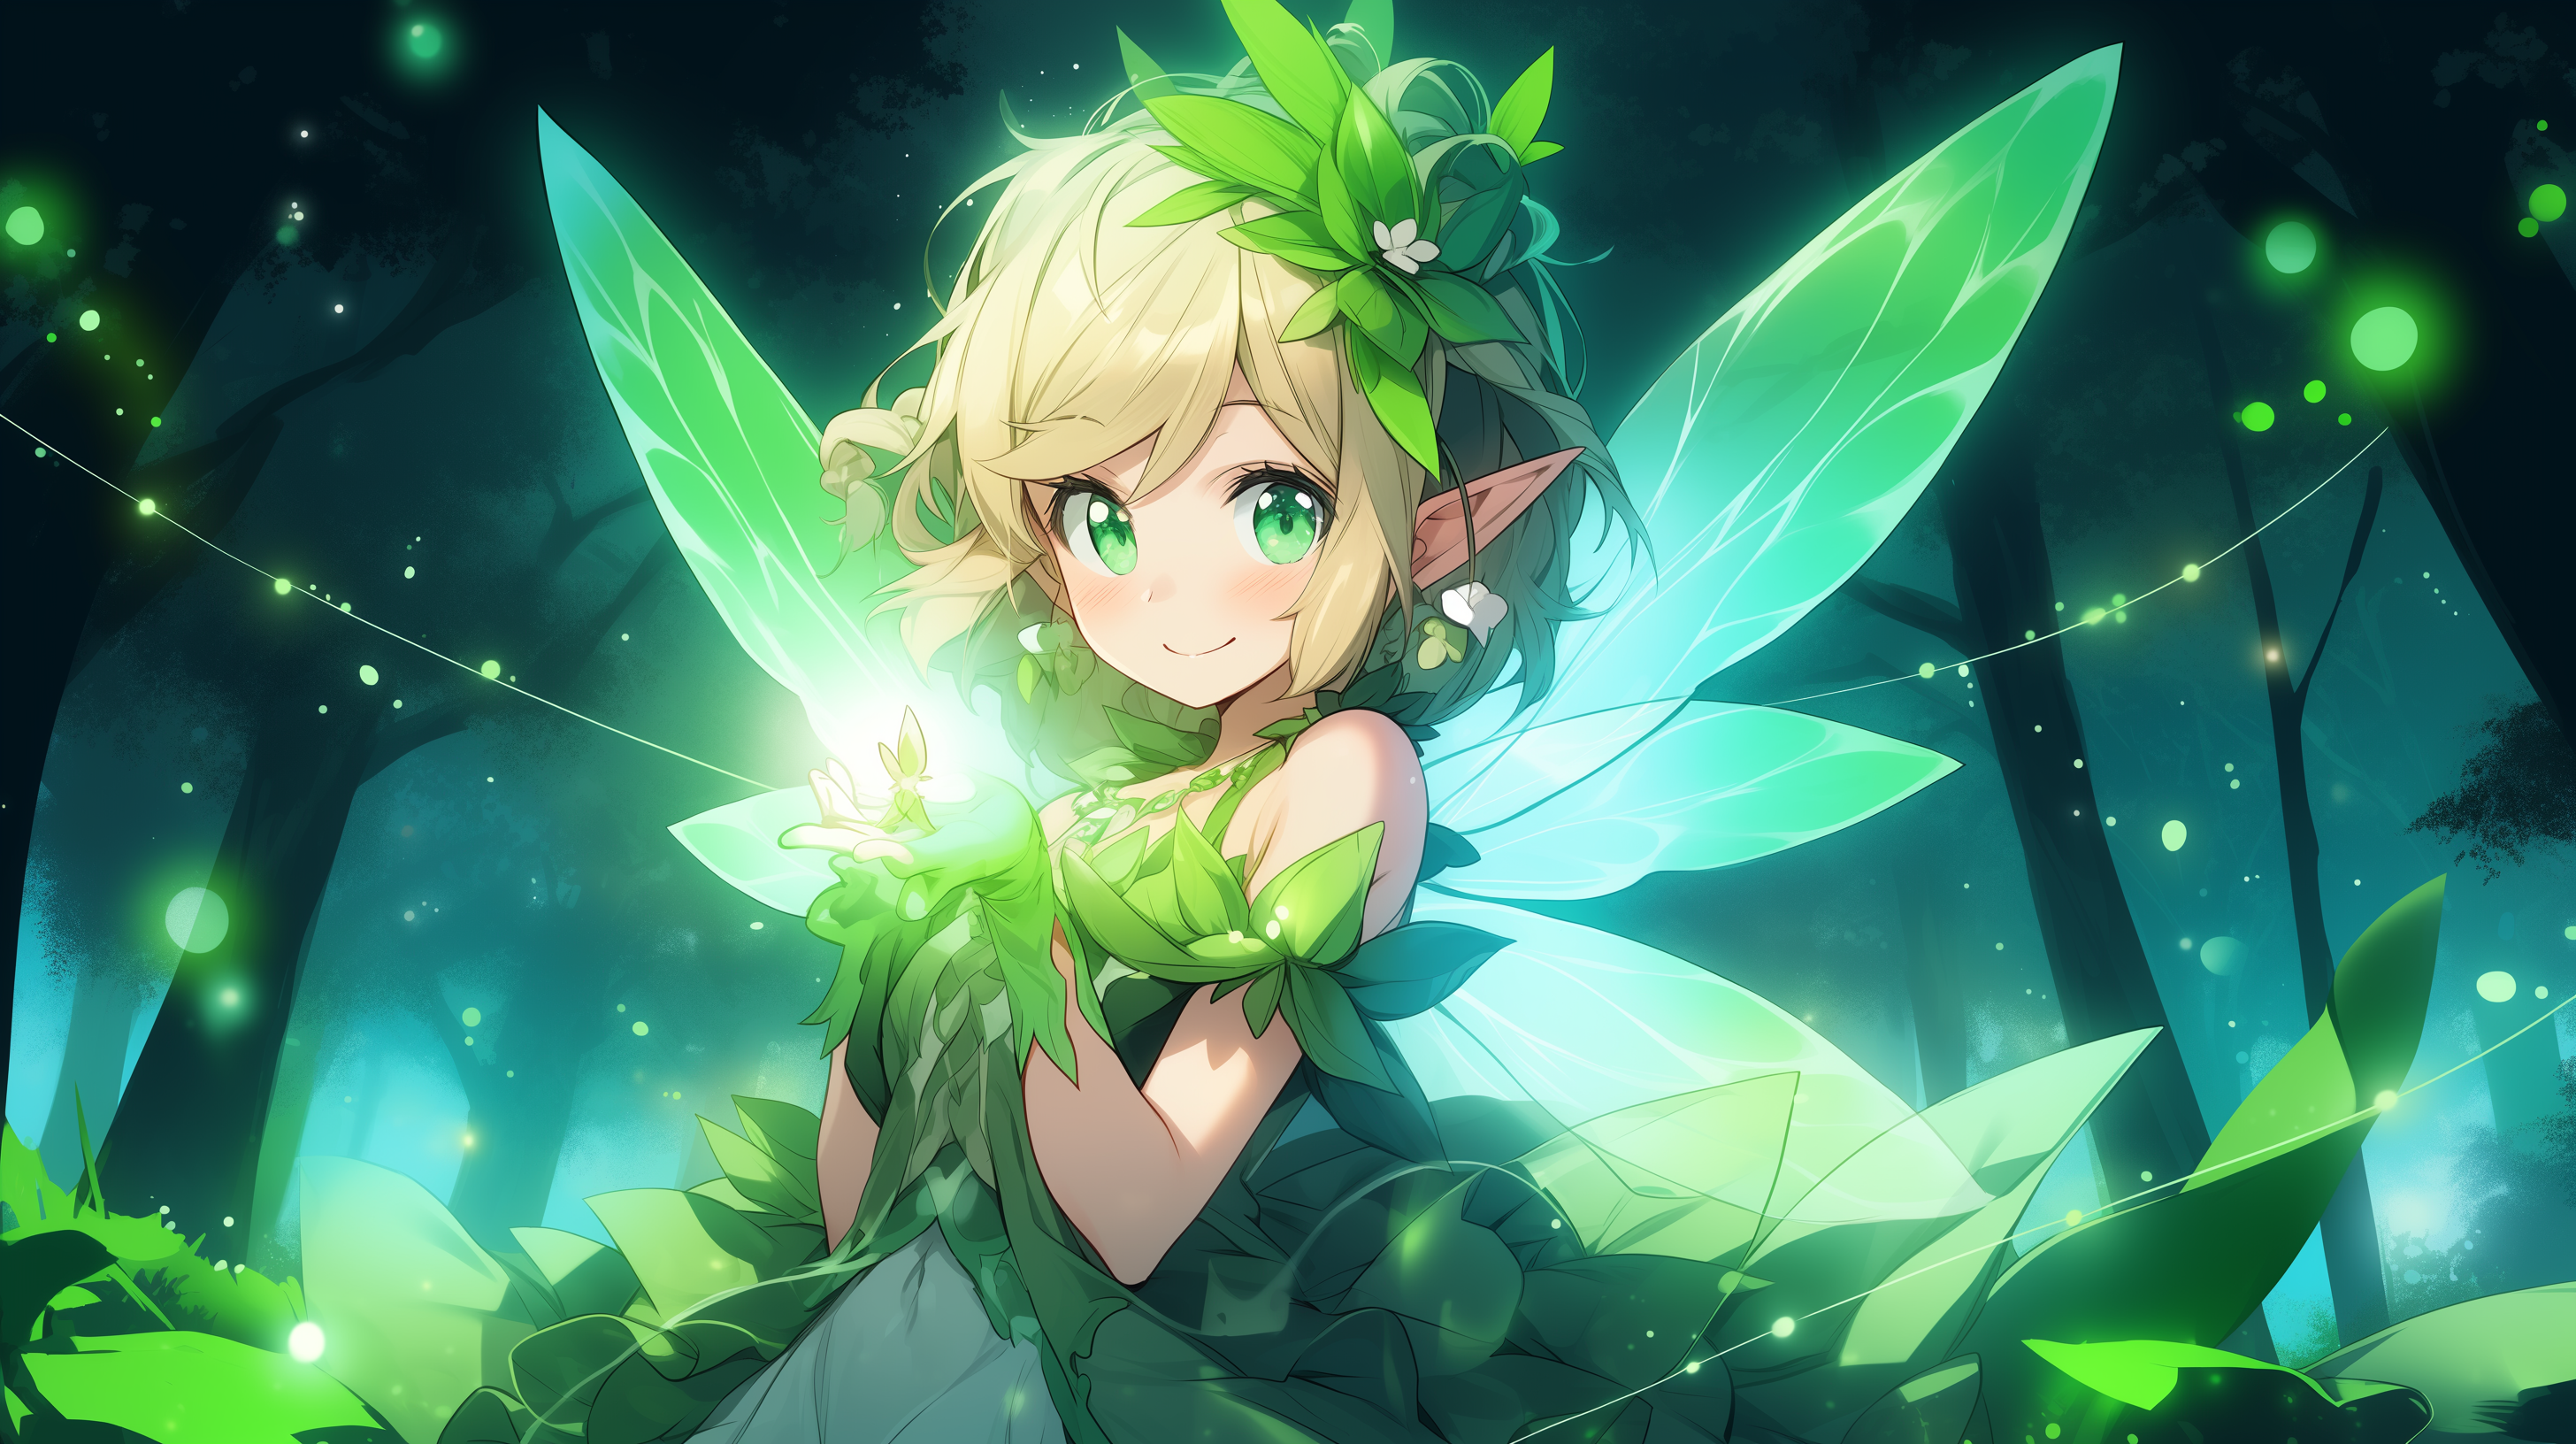 OPEN] Cute fairy anime girl - AI ADOPT by reed2929 on DeviantArt-demhanvico.com.vn